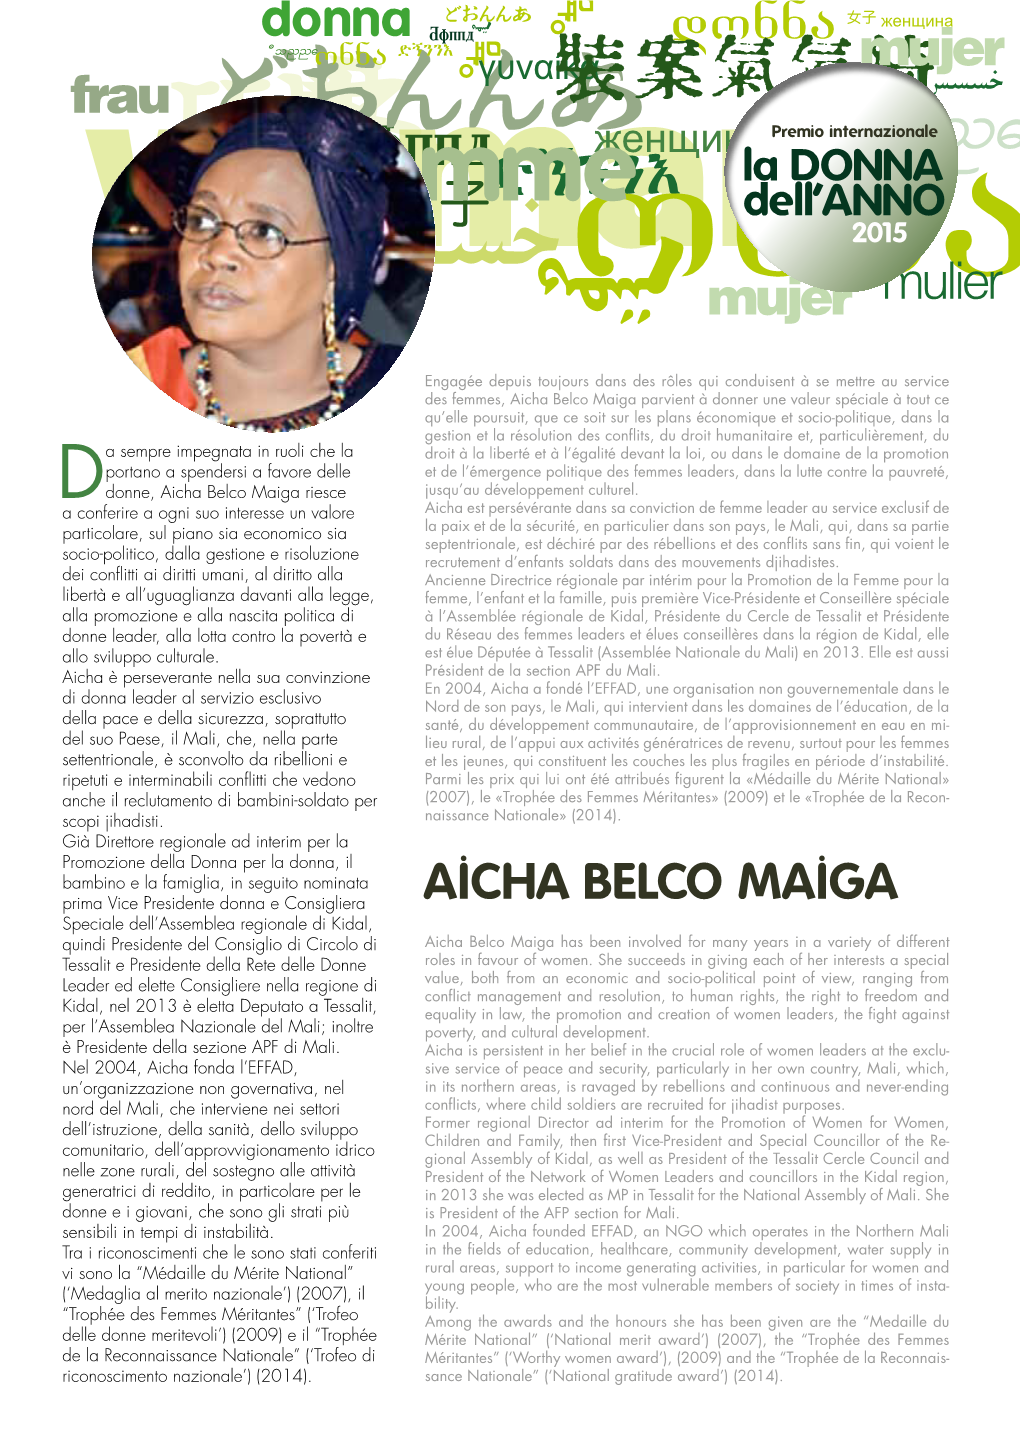 Aicha Belco Maiga